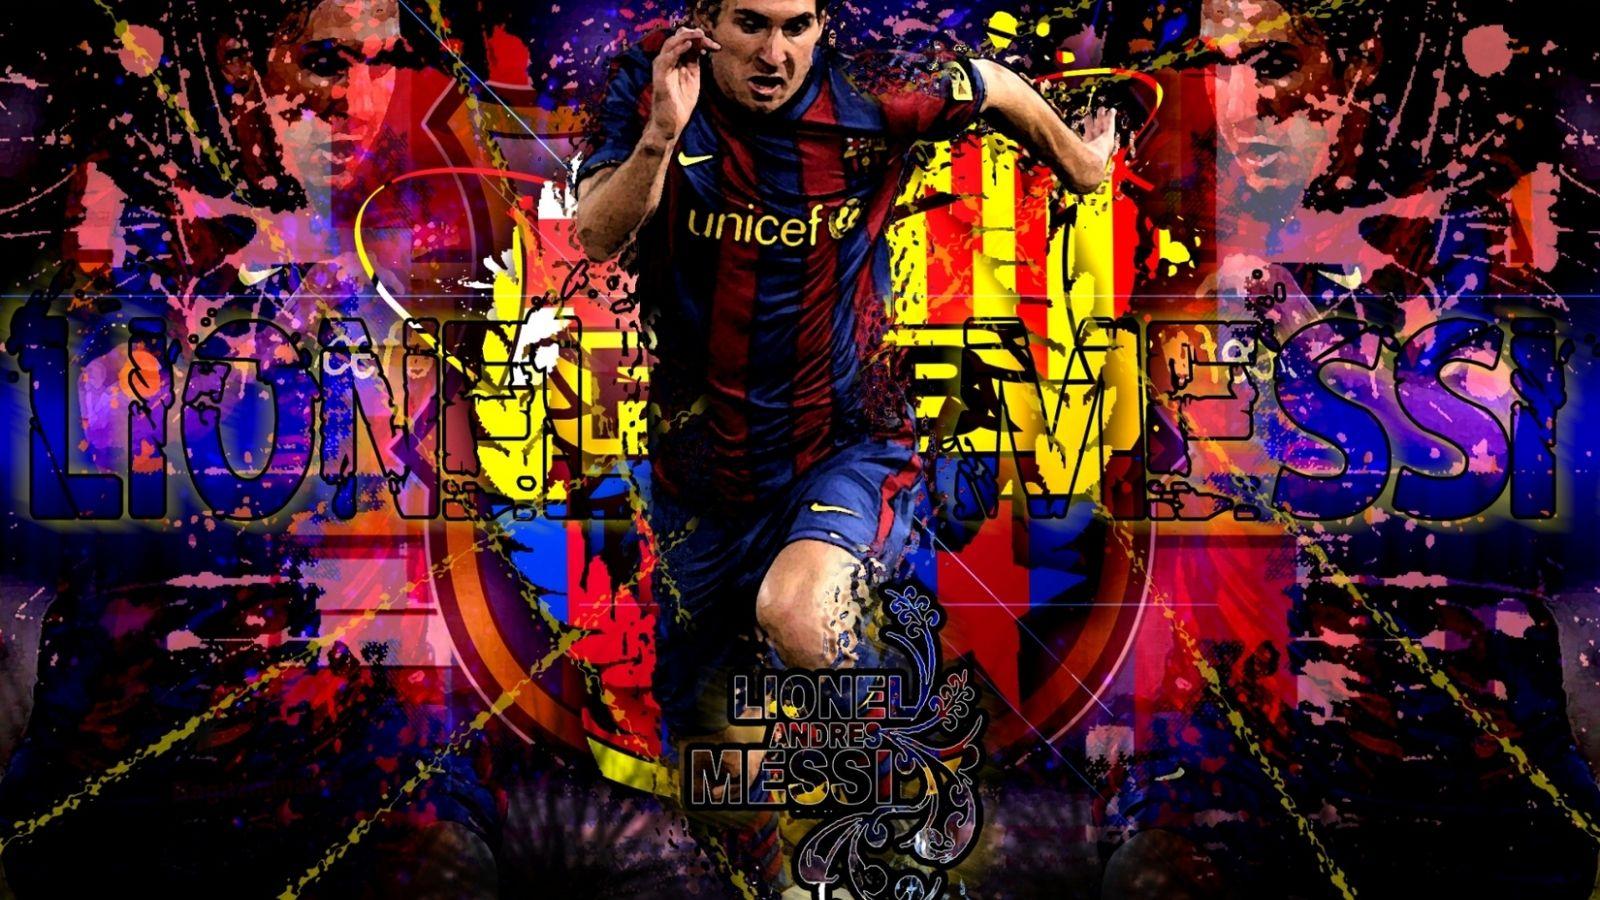 Lionel Messi FC Barcelona Wallpaper  Lionel Andres Messi Wallpaper  22601854  Fanpop